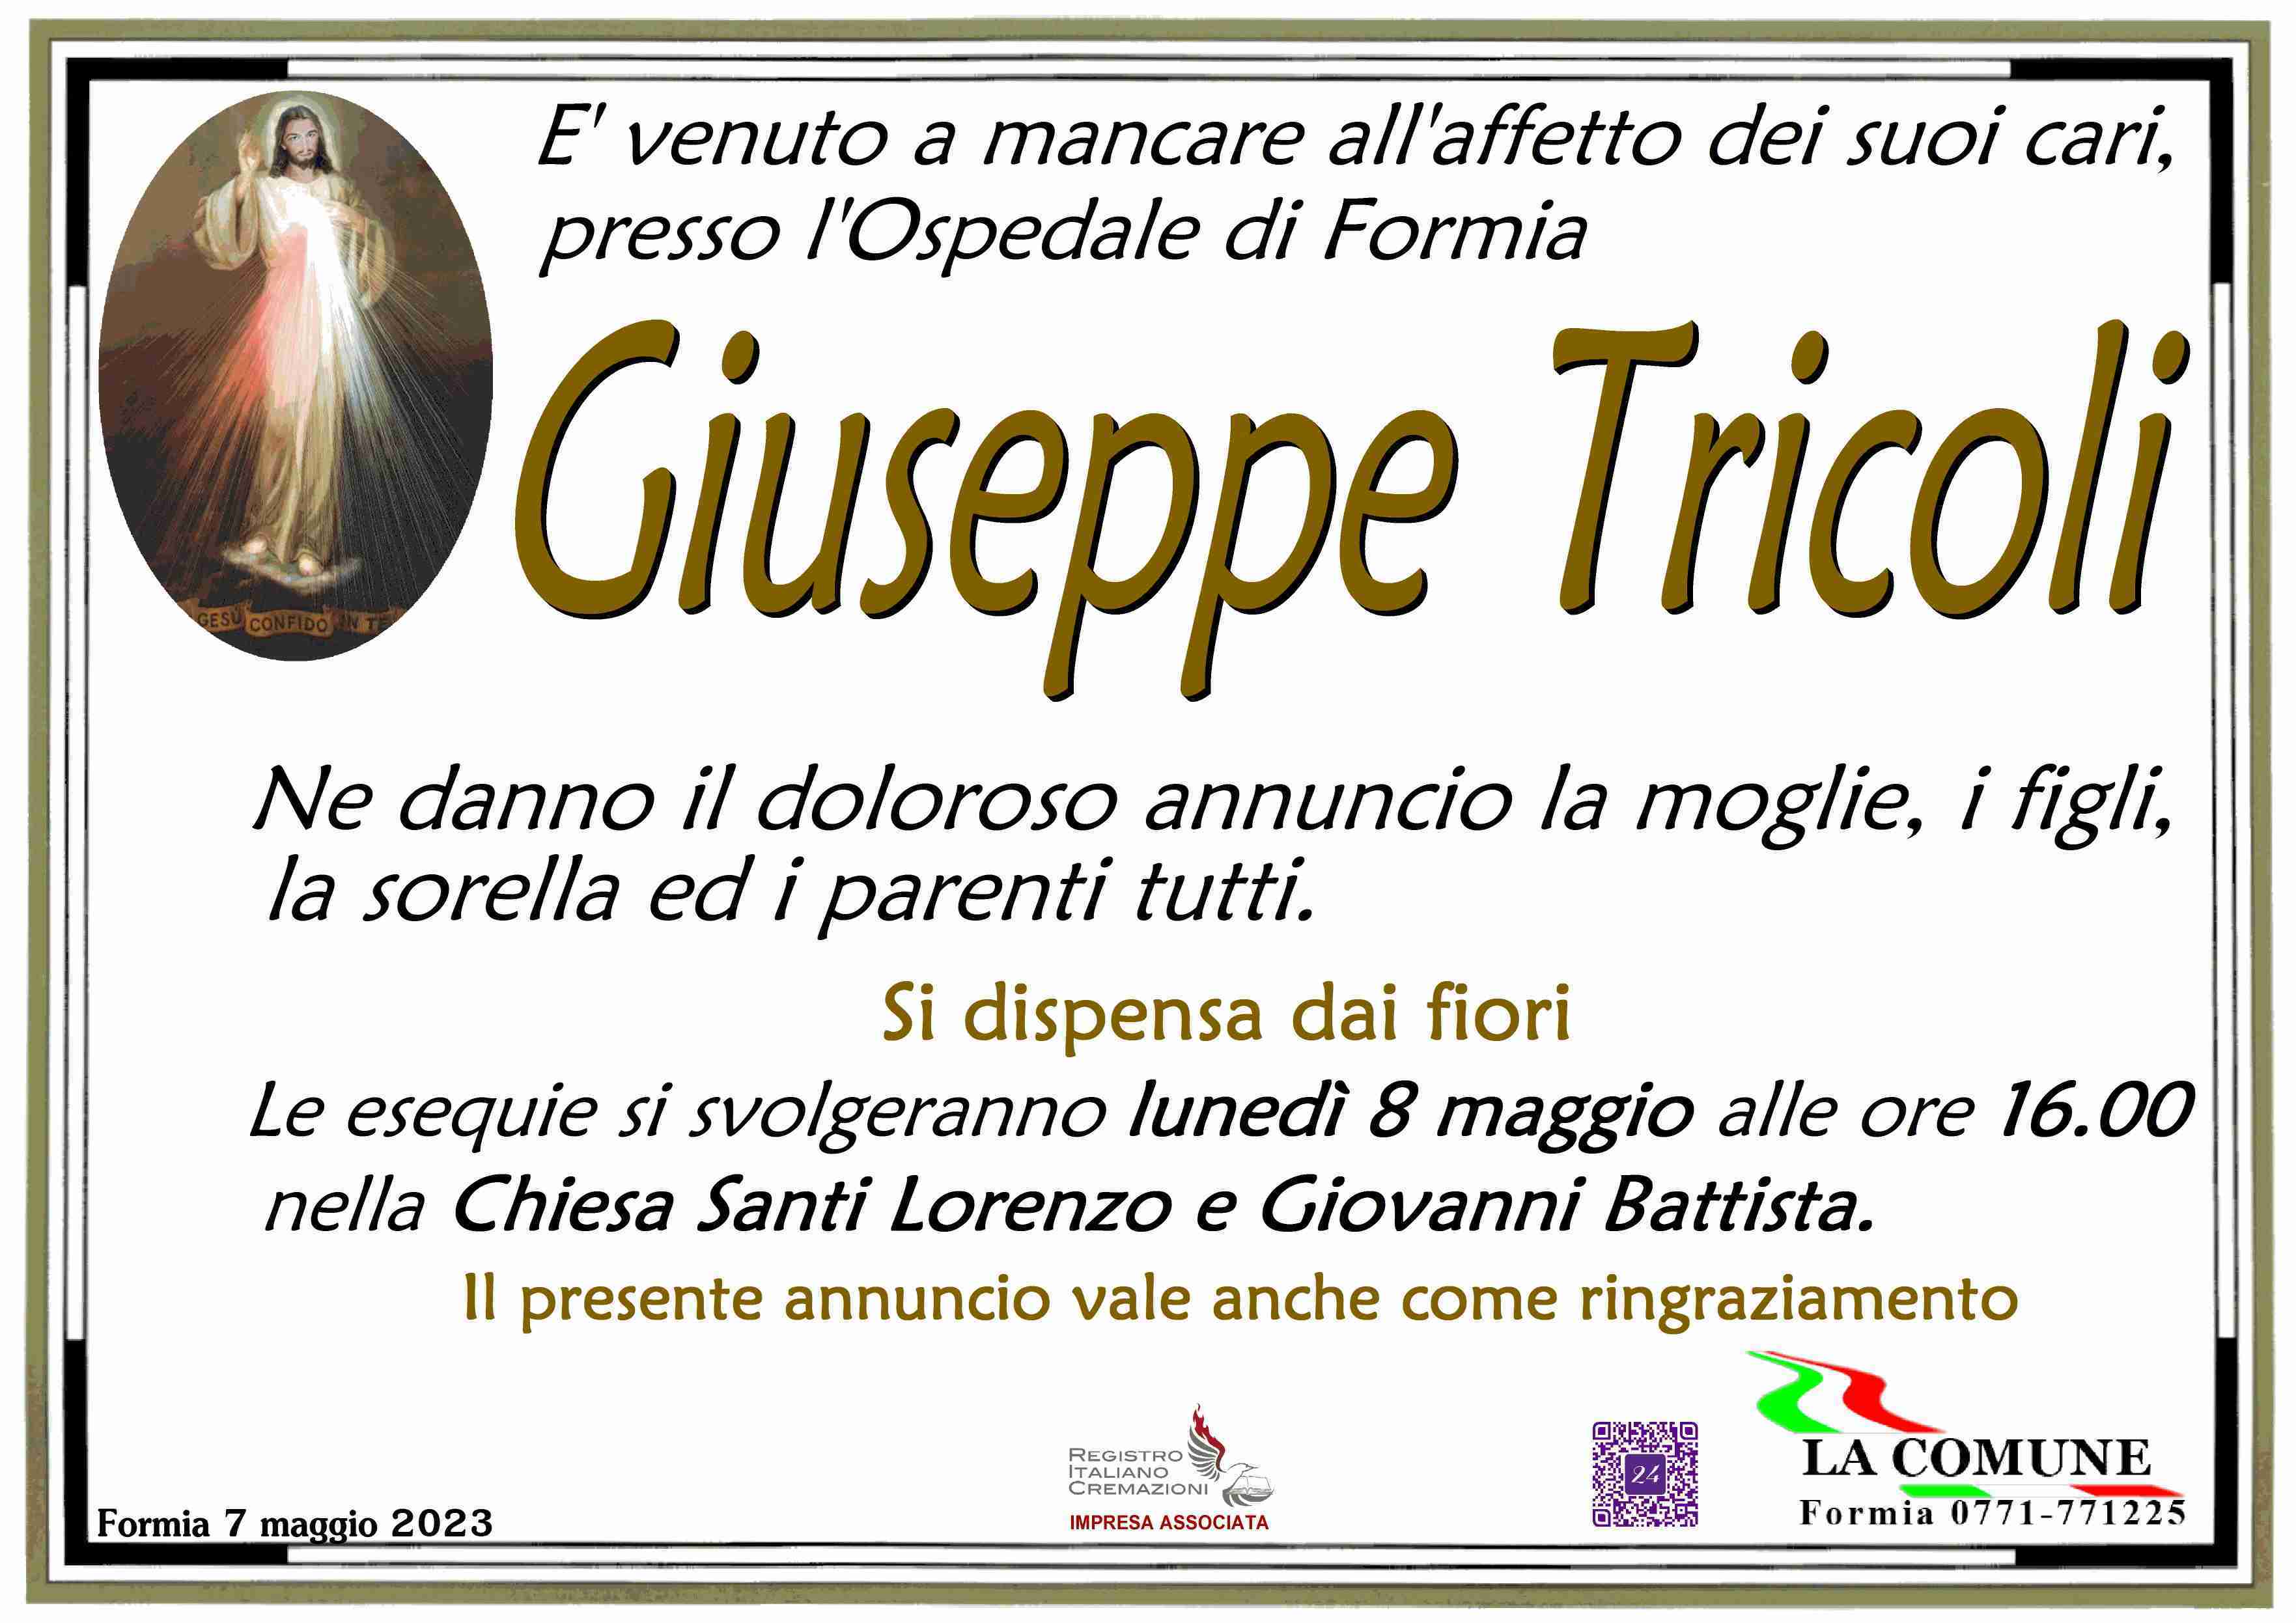 Giuseppe Tricoli